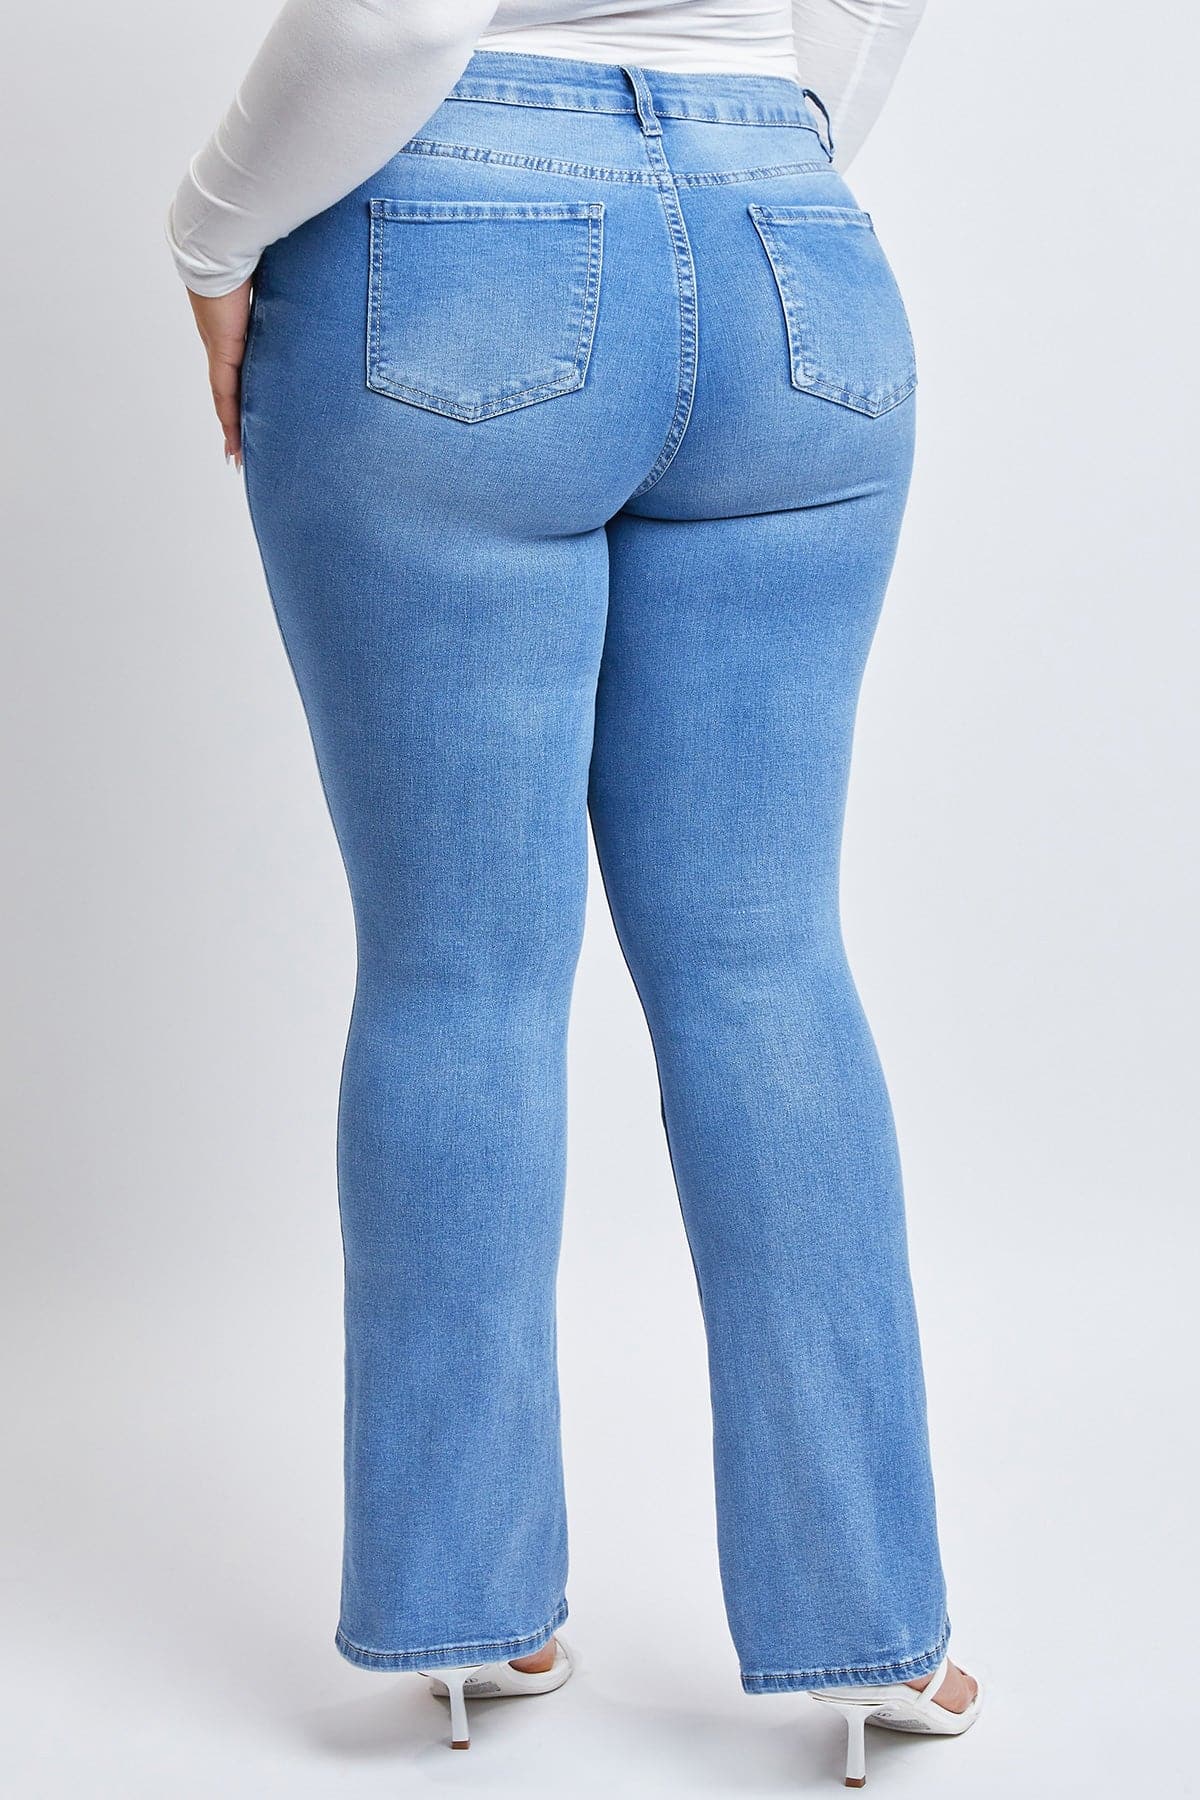 Plus Size Women's Flare Jeans